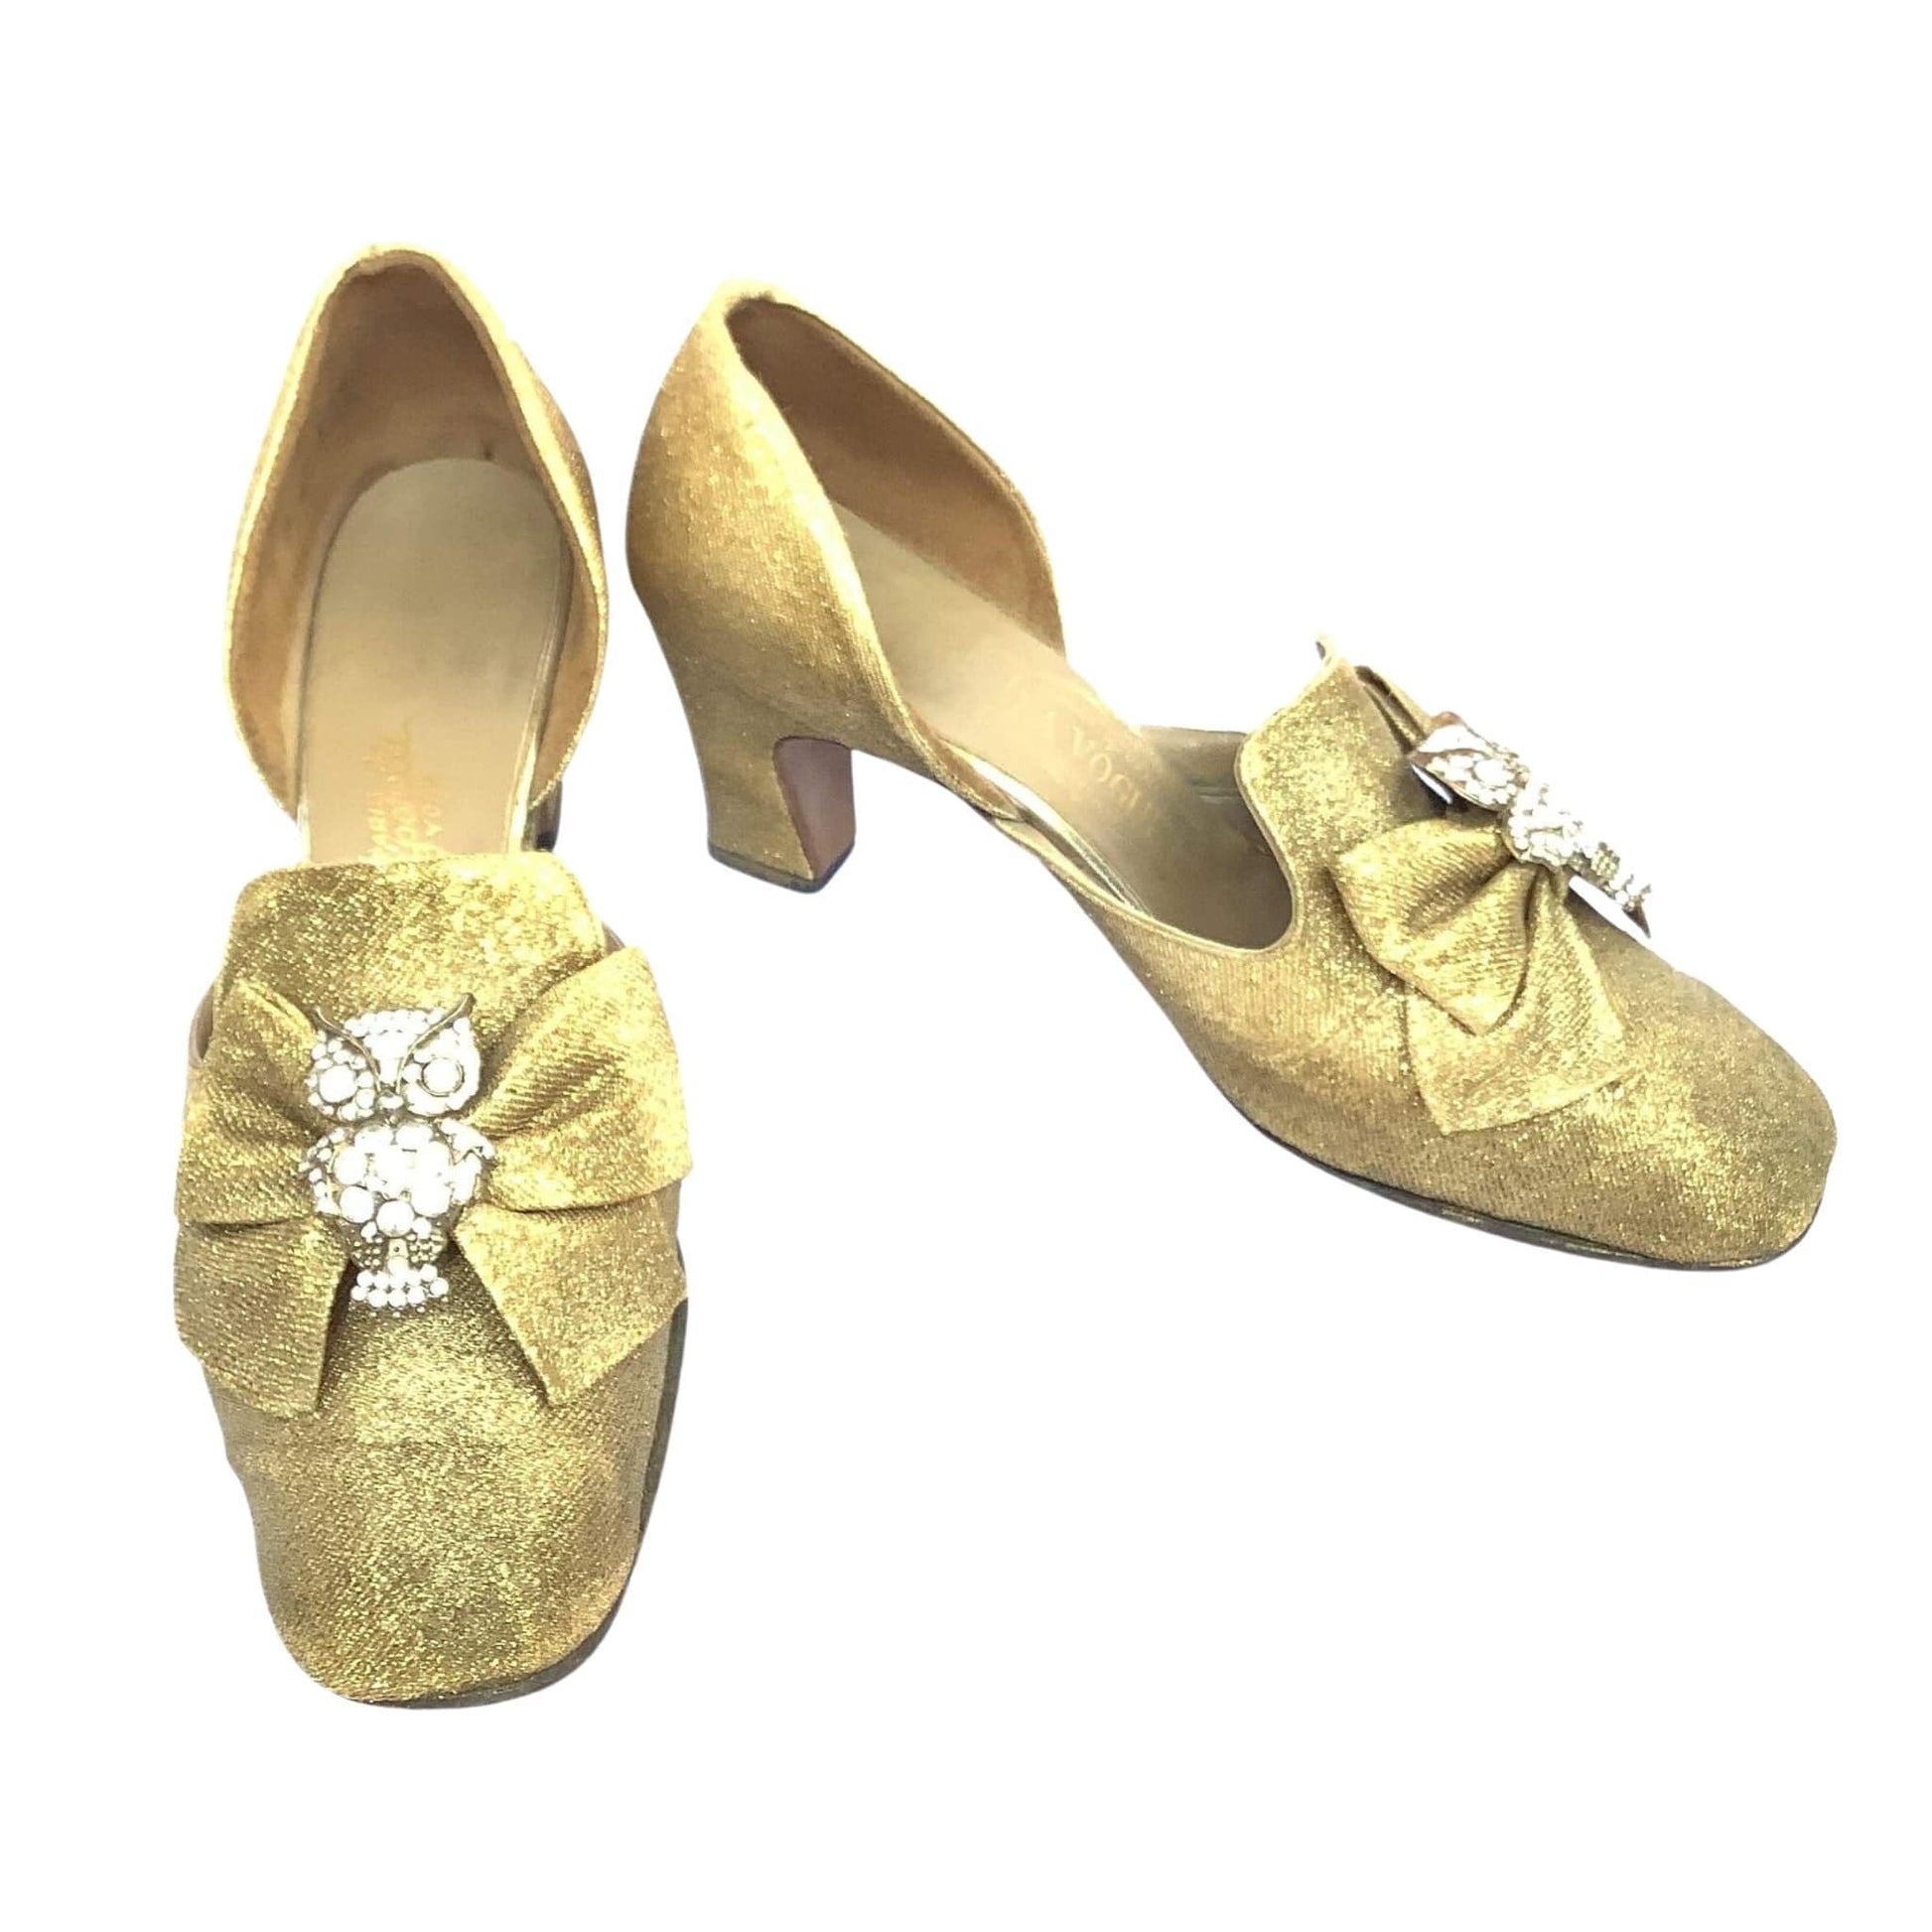 Vintage Schiaparelli Heels 7.5 / Gold / Vintage 1950s